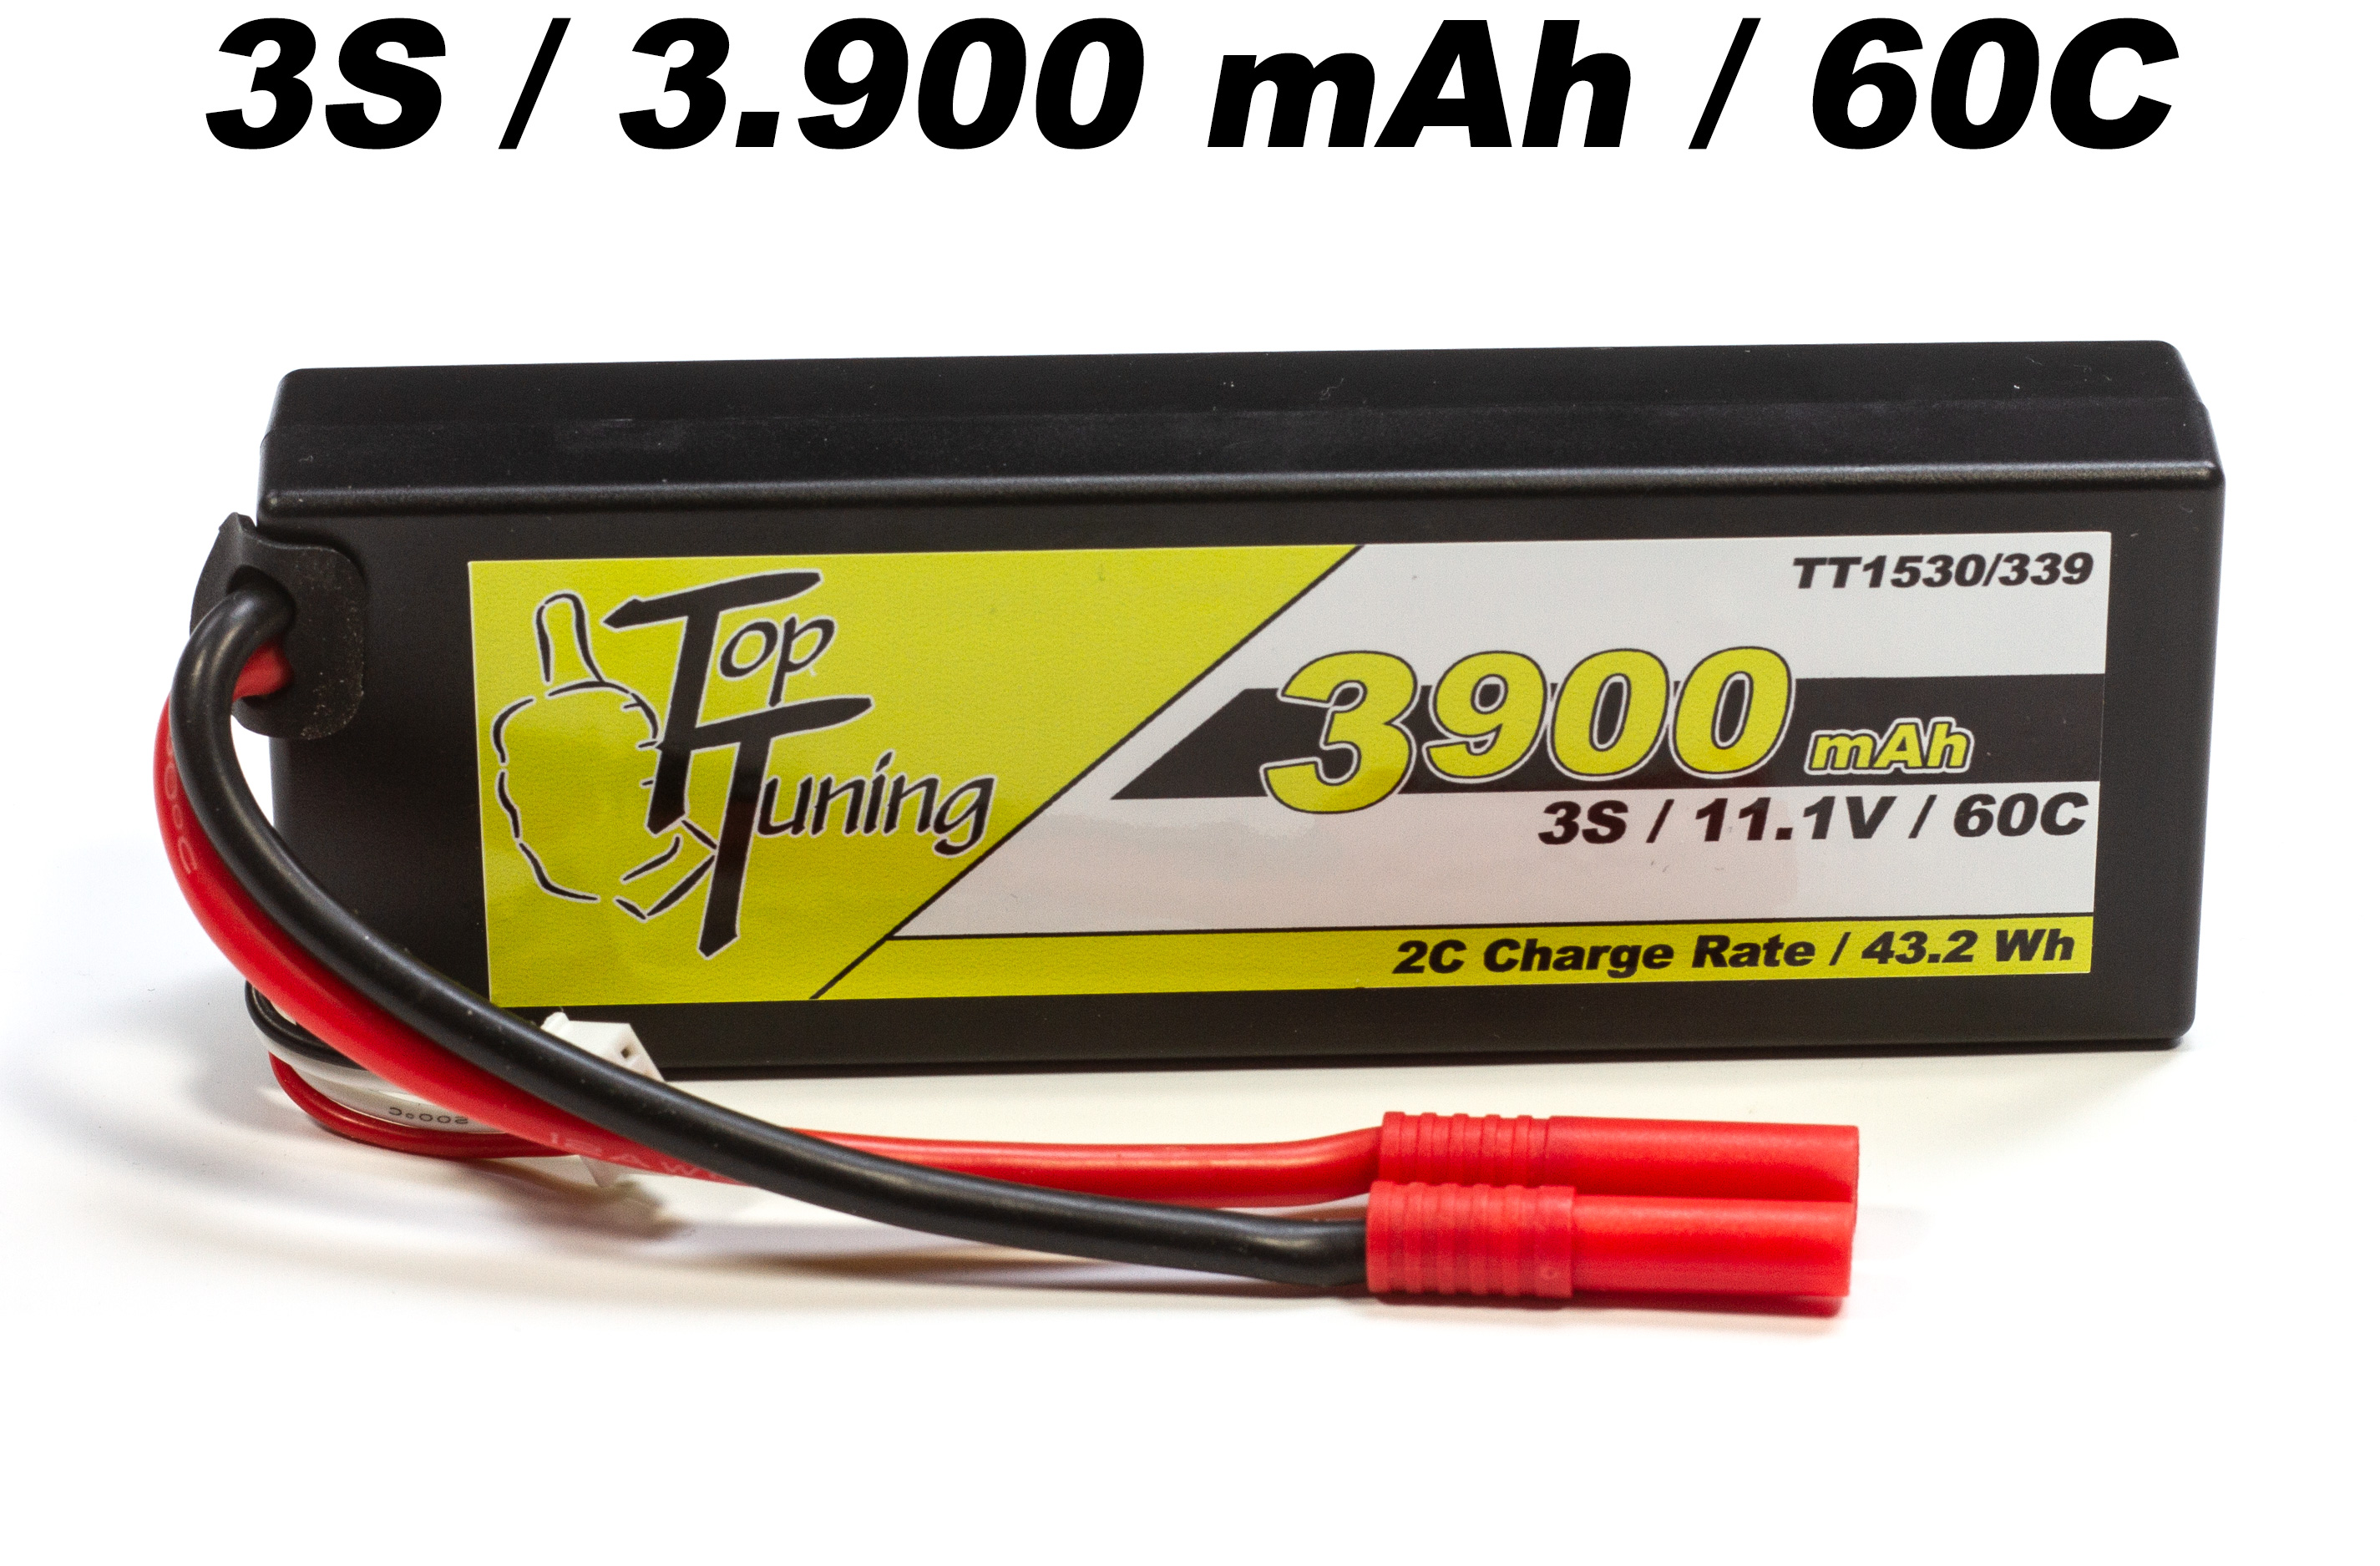 TT1530/339 Top Tuning 3900 mAh LiPo battery 3S, 11,1V